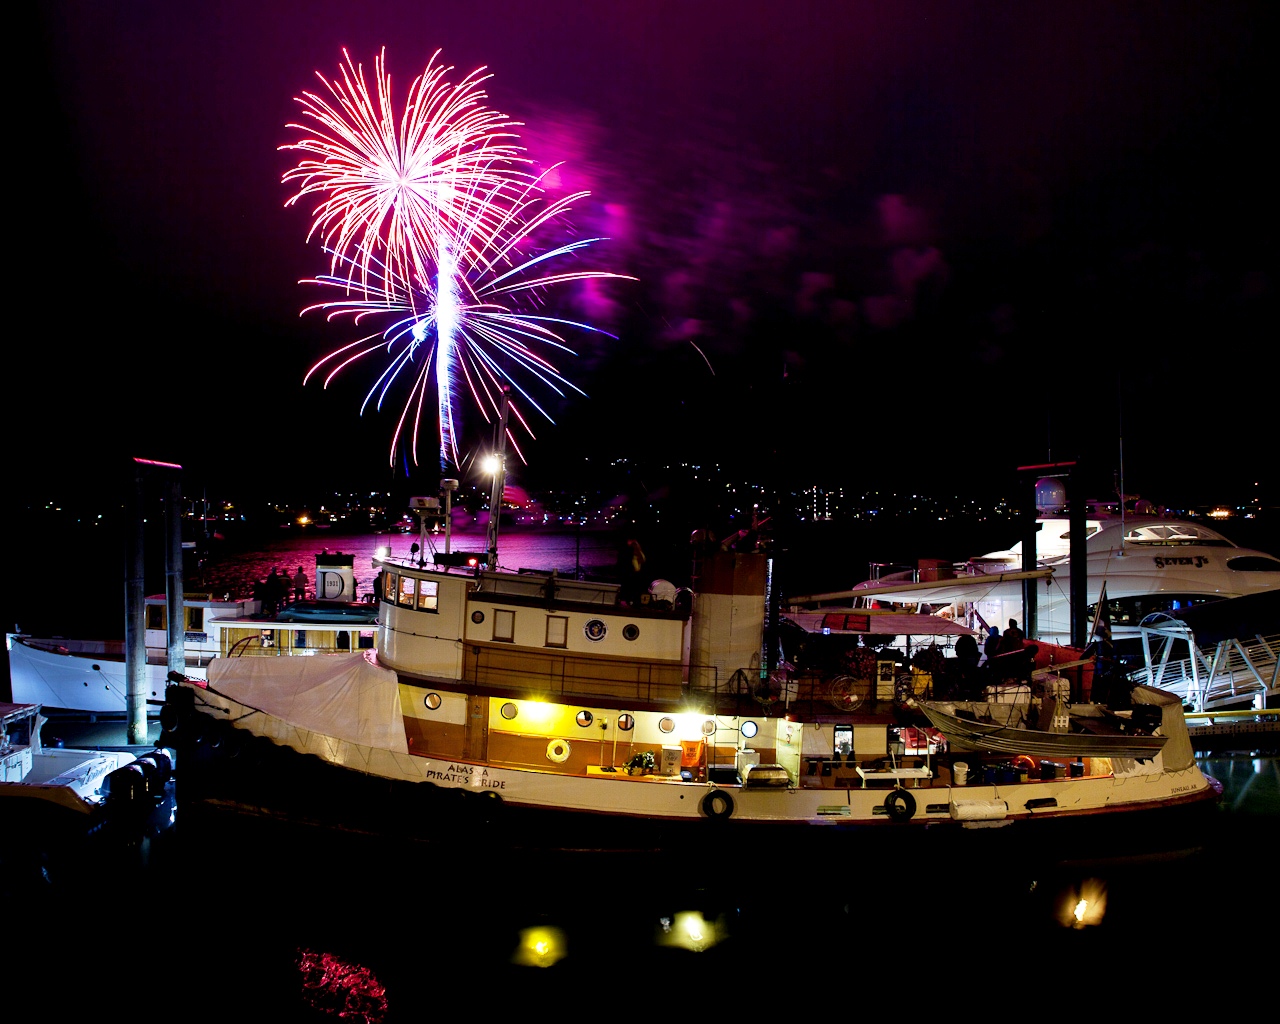 Alaska Pirates Pride (APP) - At night with fireworks